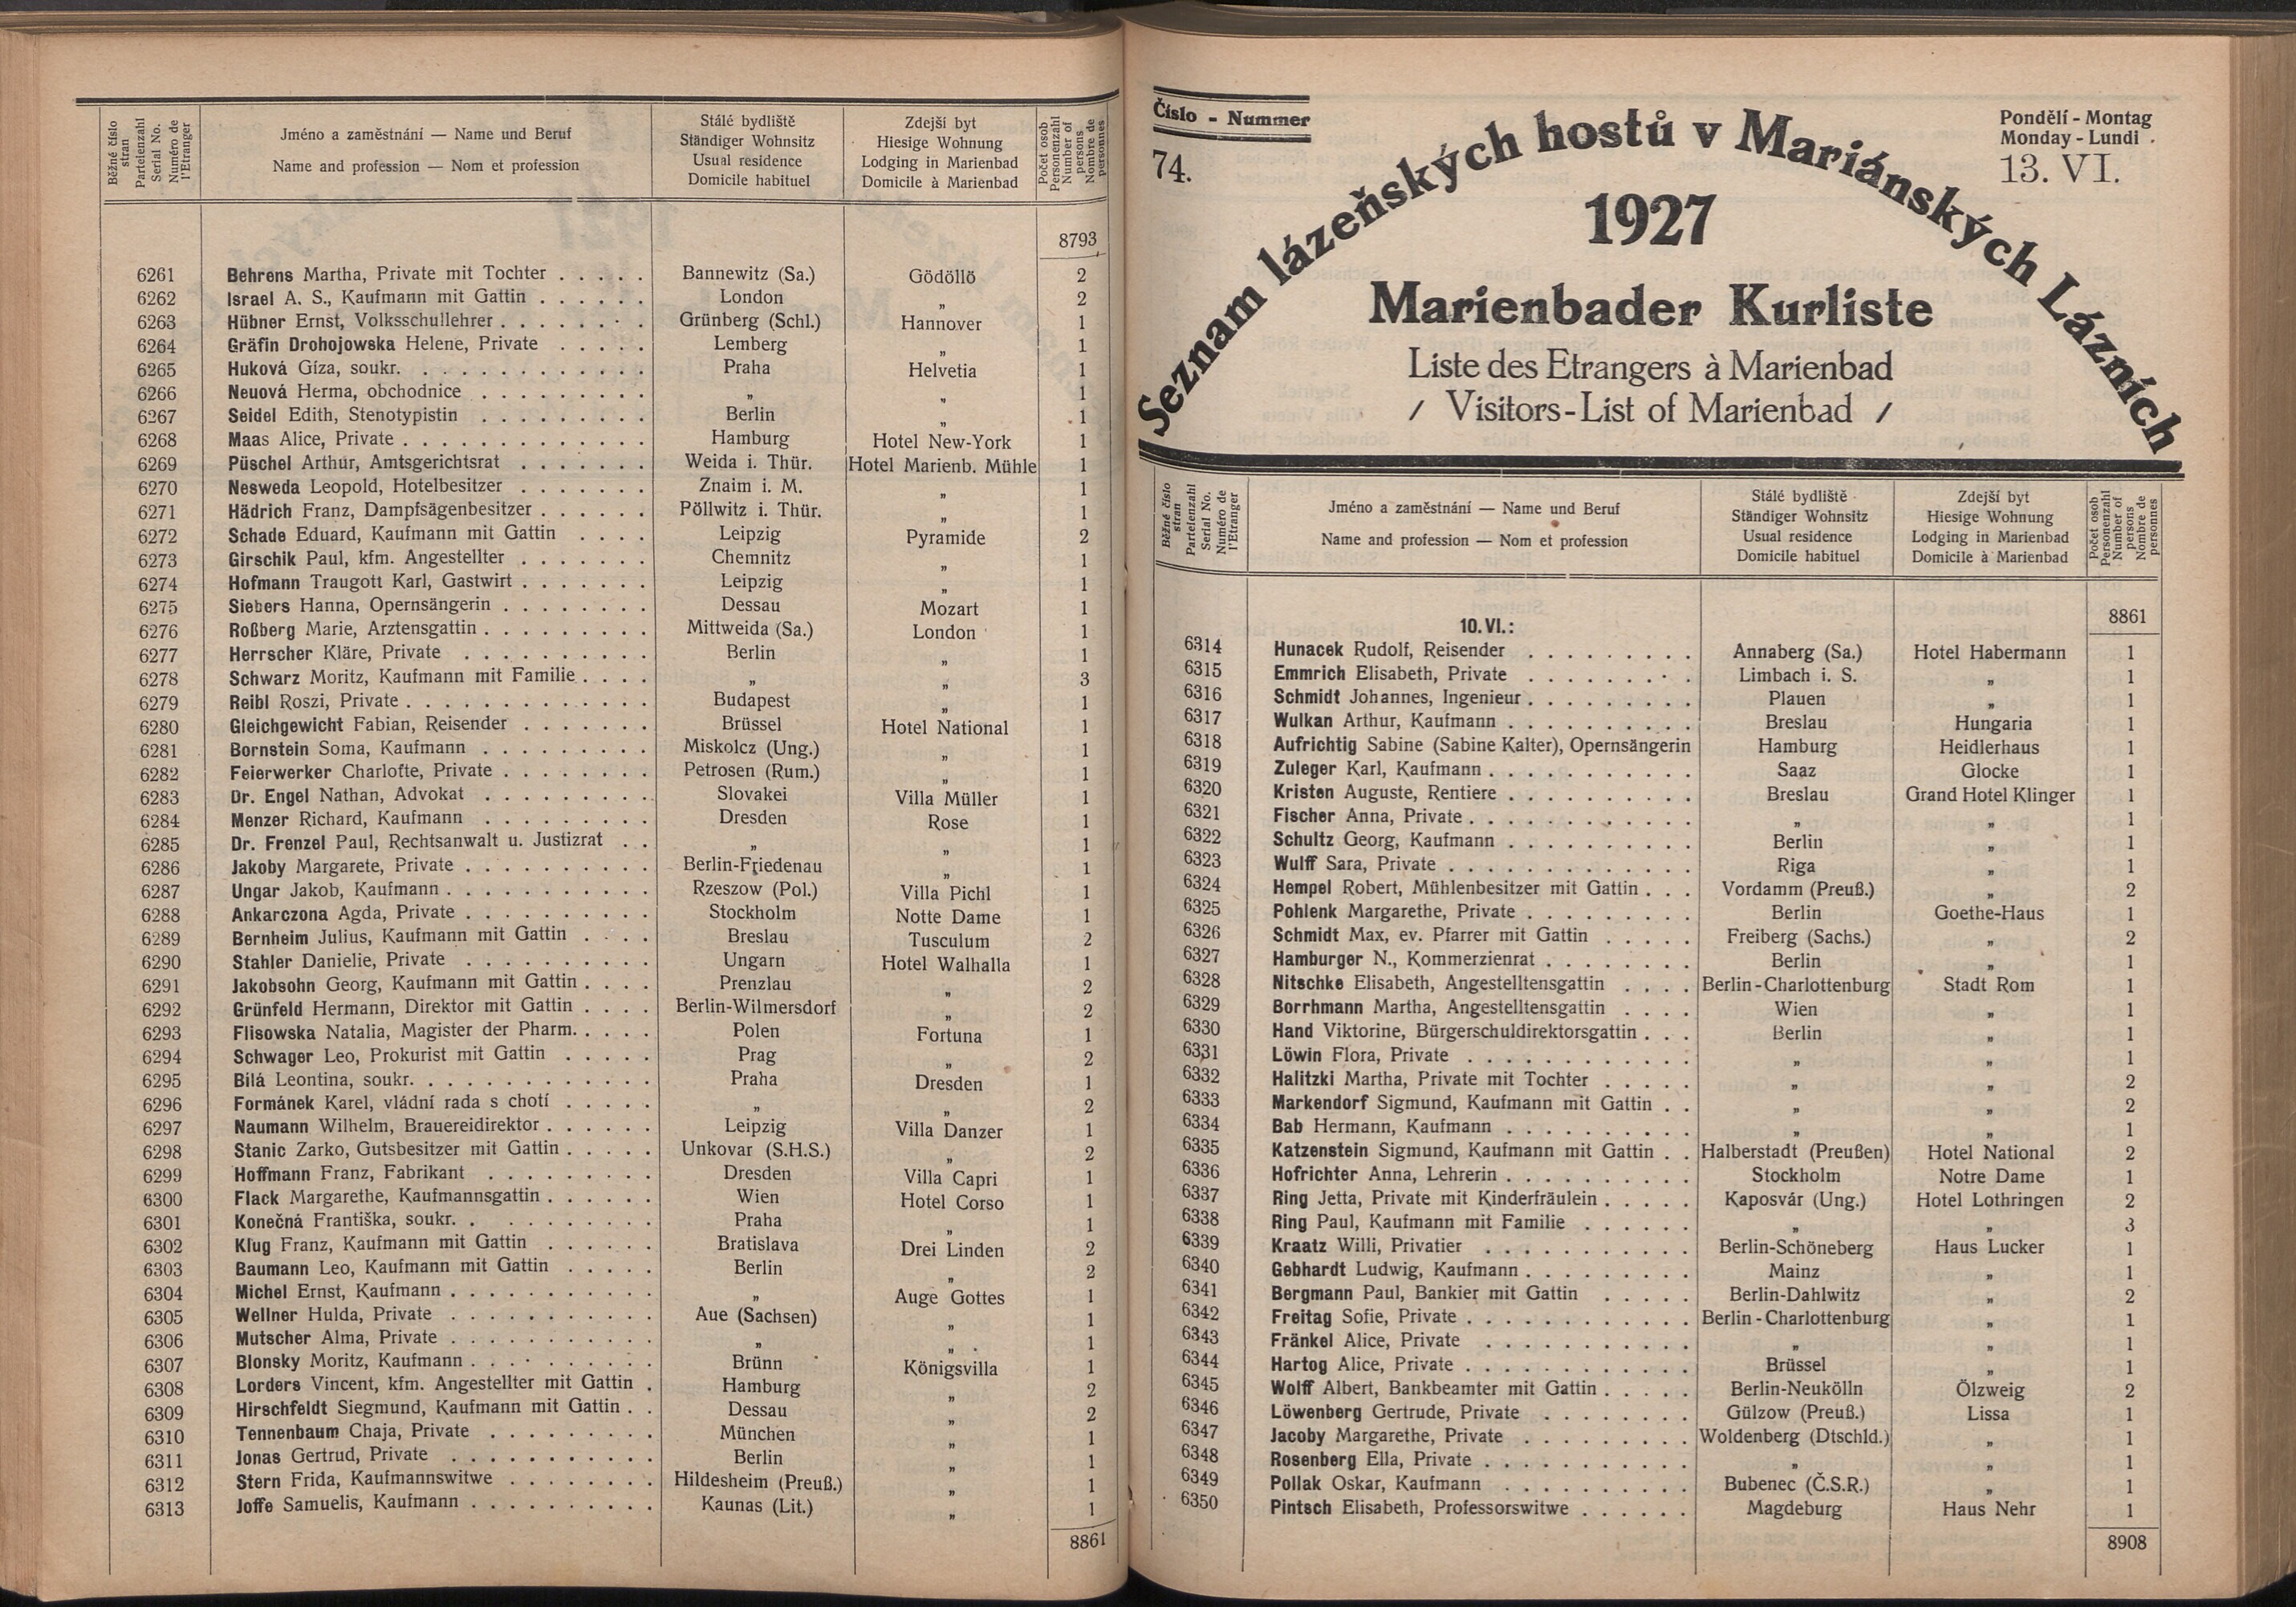 153. soap-ch_knihovna_marienbader-kurliste-1927_1530